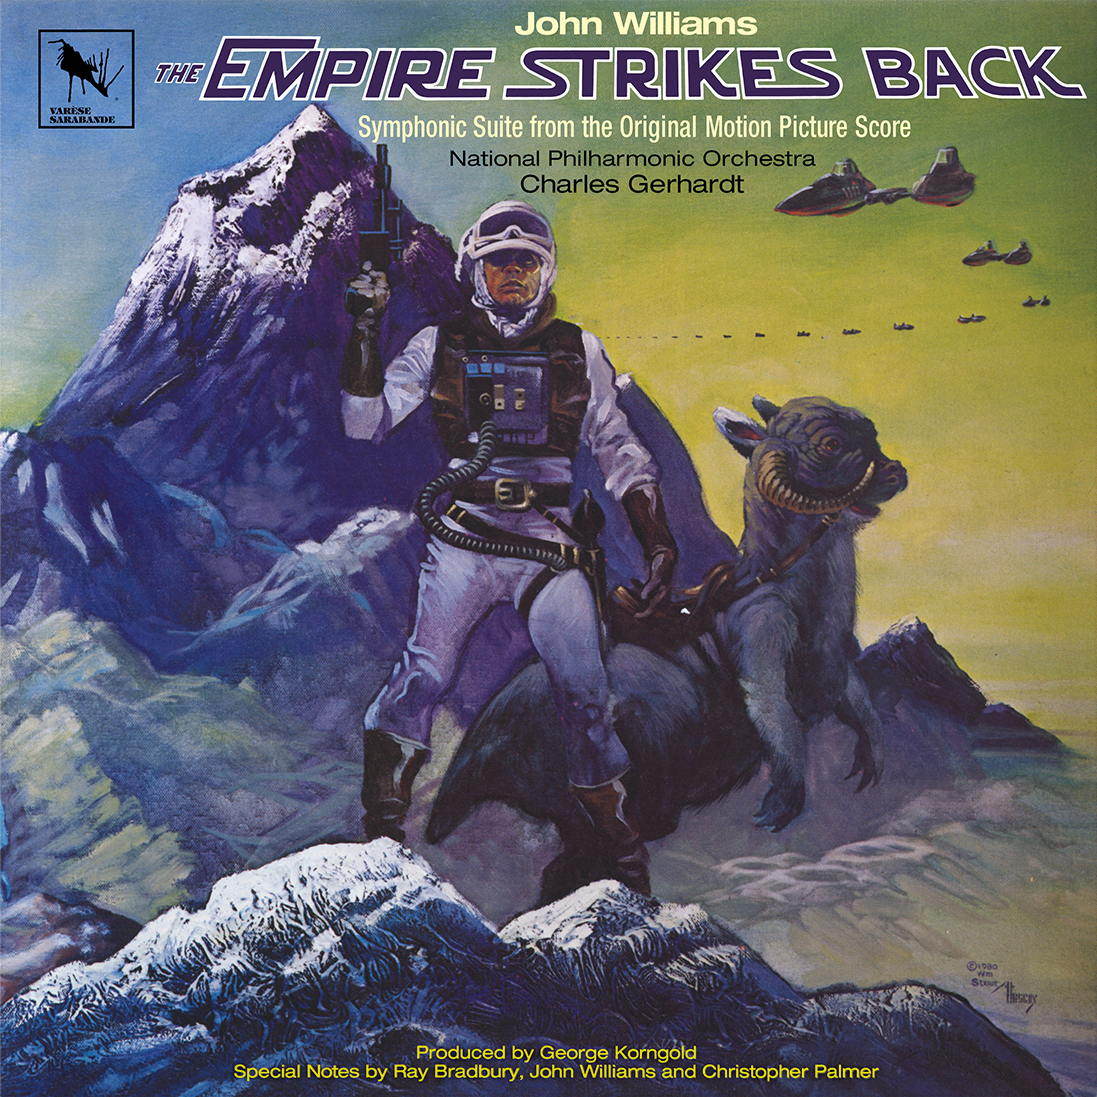 Саундтрек UME (USM) John Williams, Charles Gerhardt, National Philharmonic Orchestra - The Empire Strikes Back (Symphonic Suite) ramses rise of empire pc